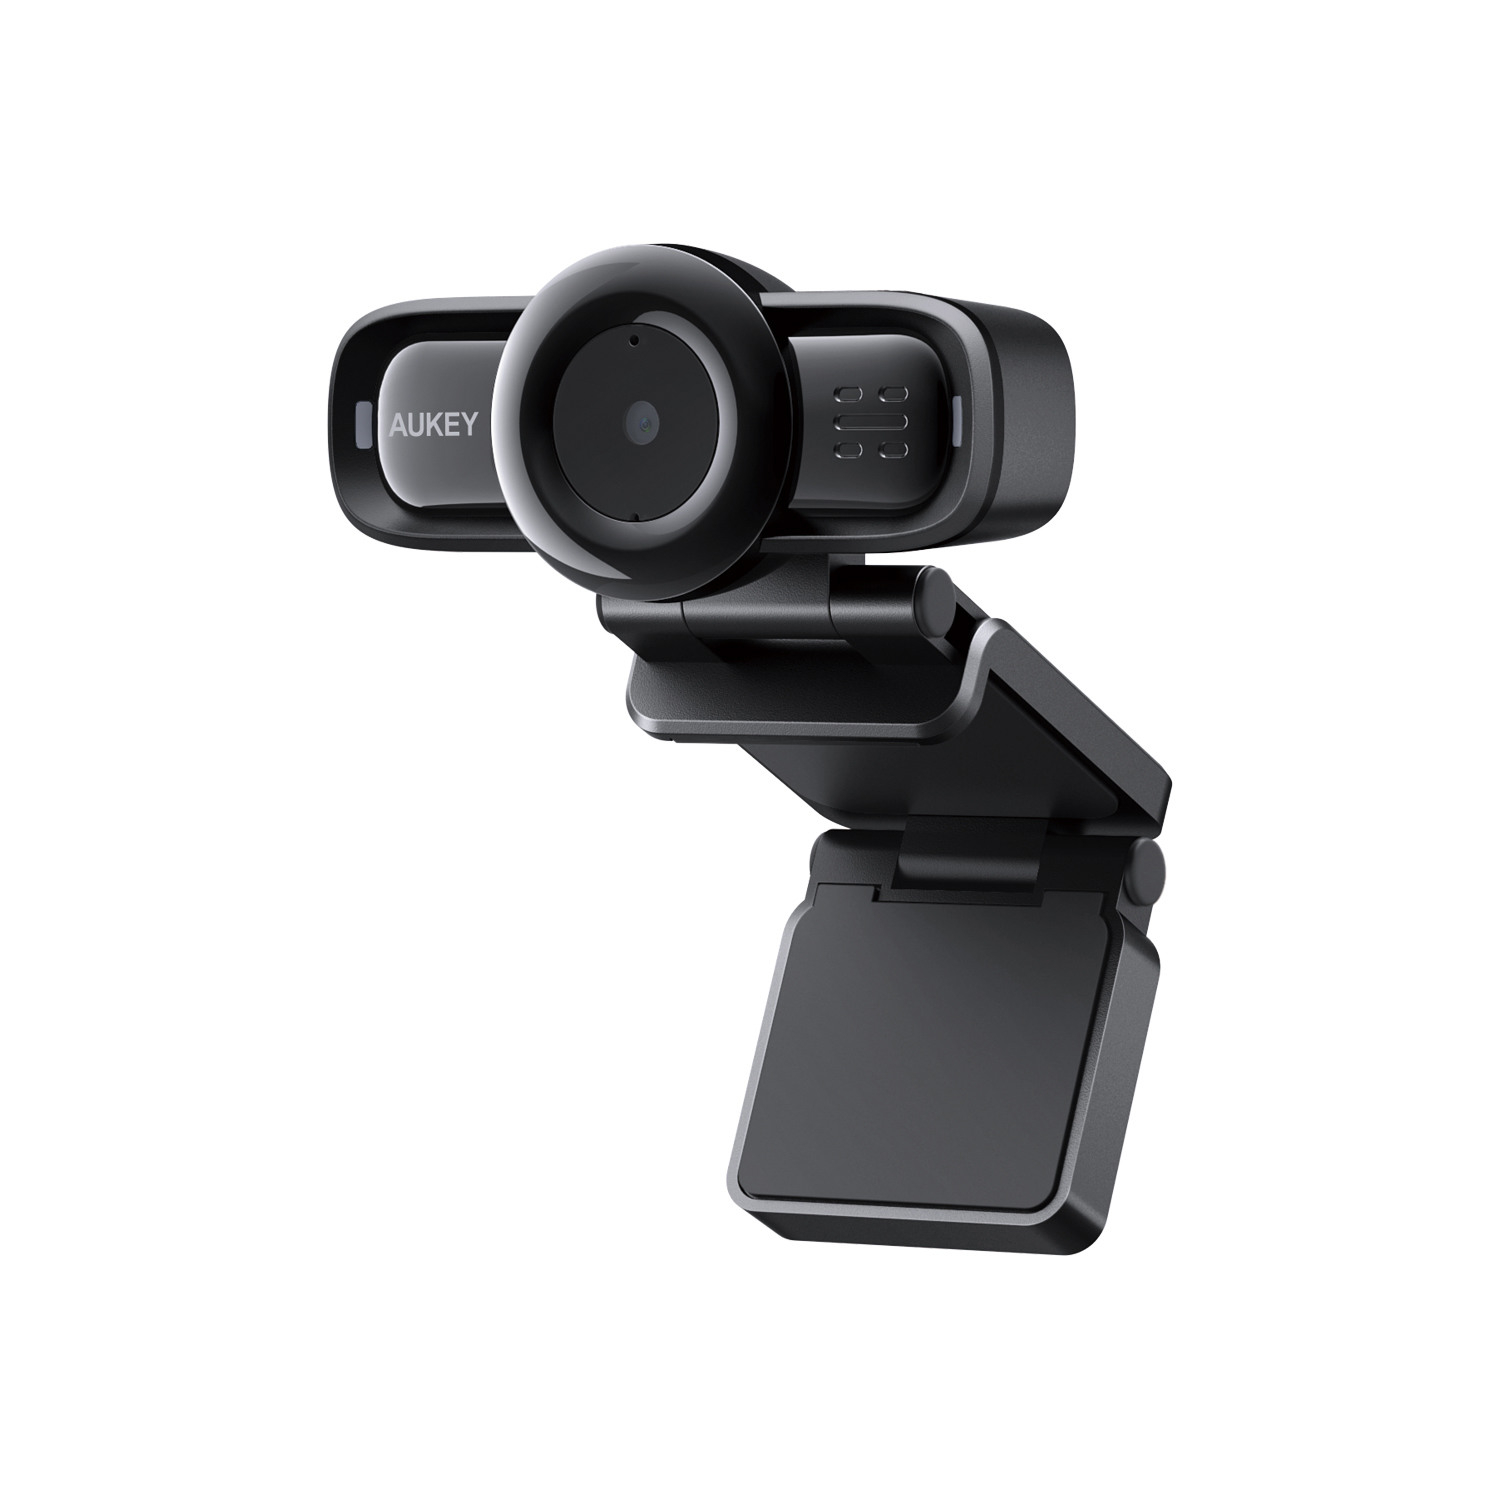 AUKEY Stream Pro Webcam AF 1080P PC-LM3 black, USB 2.0